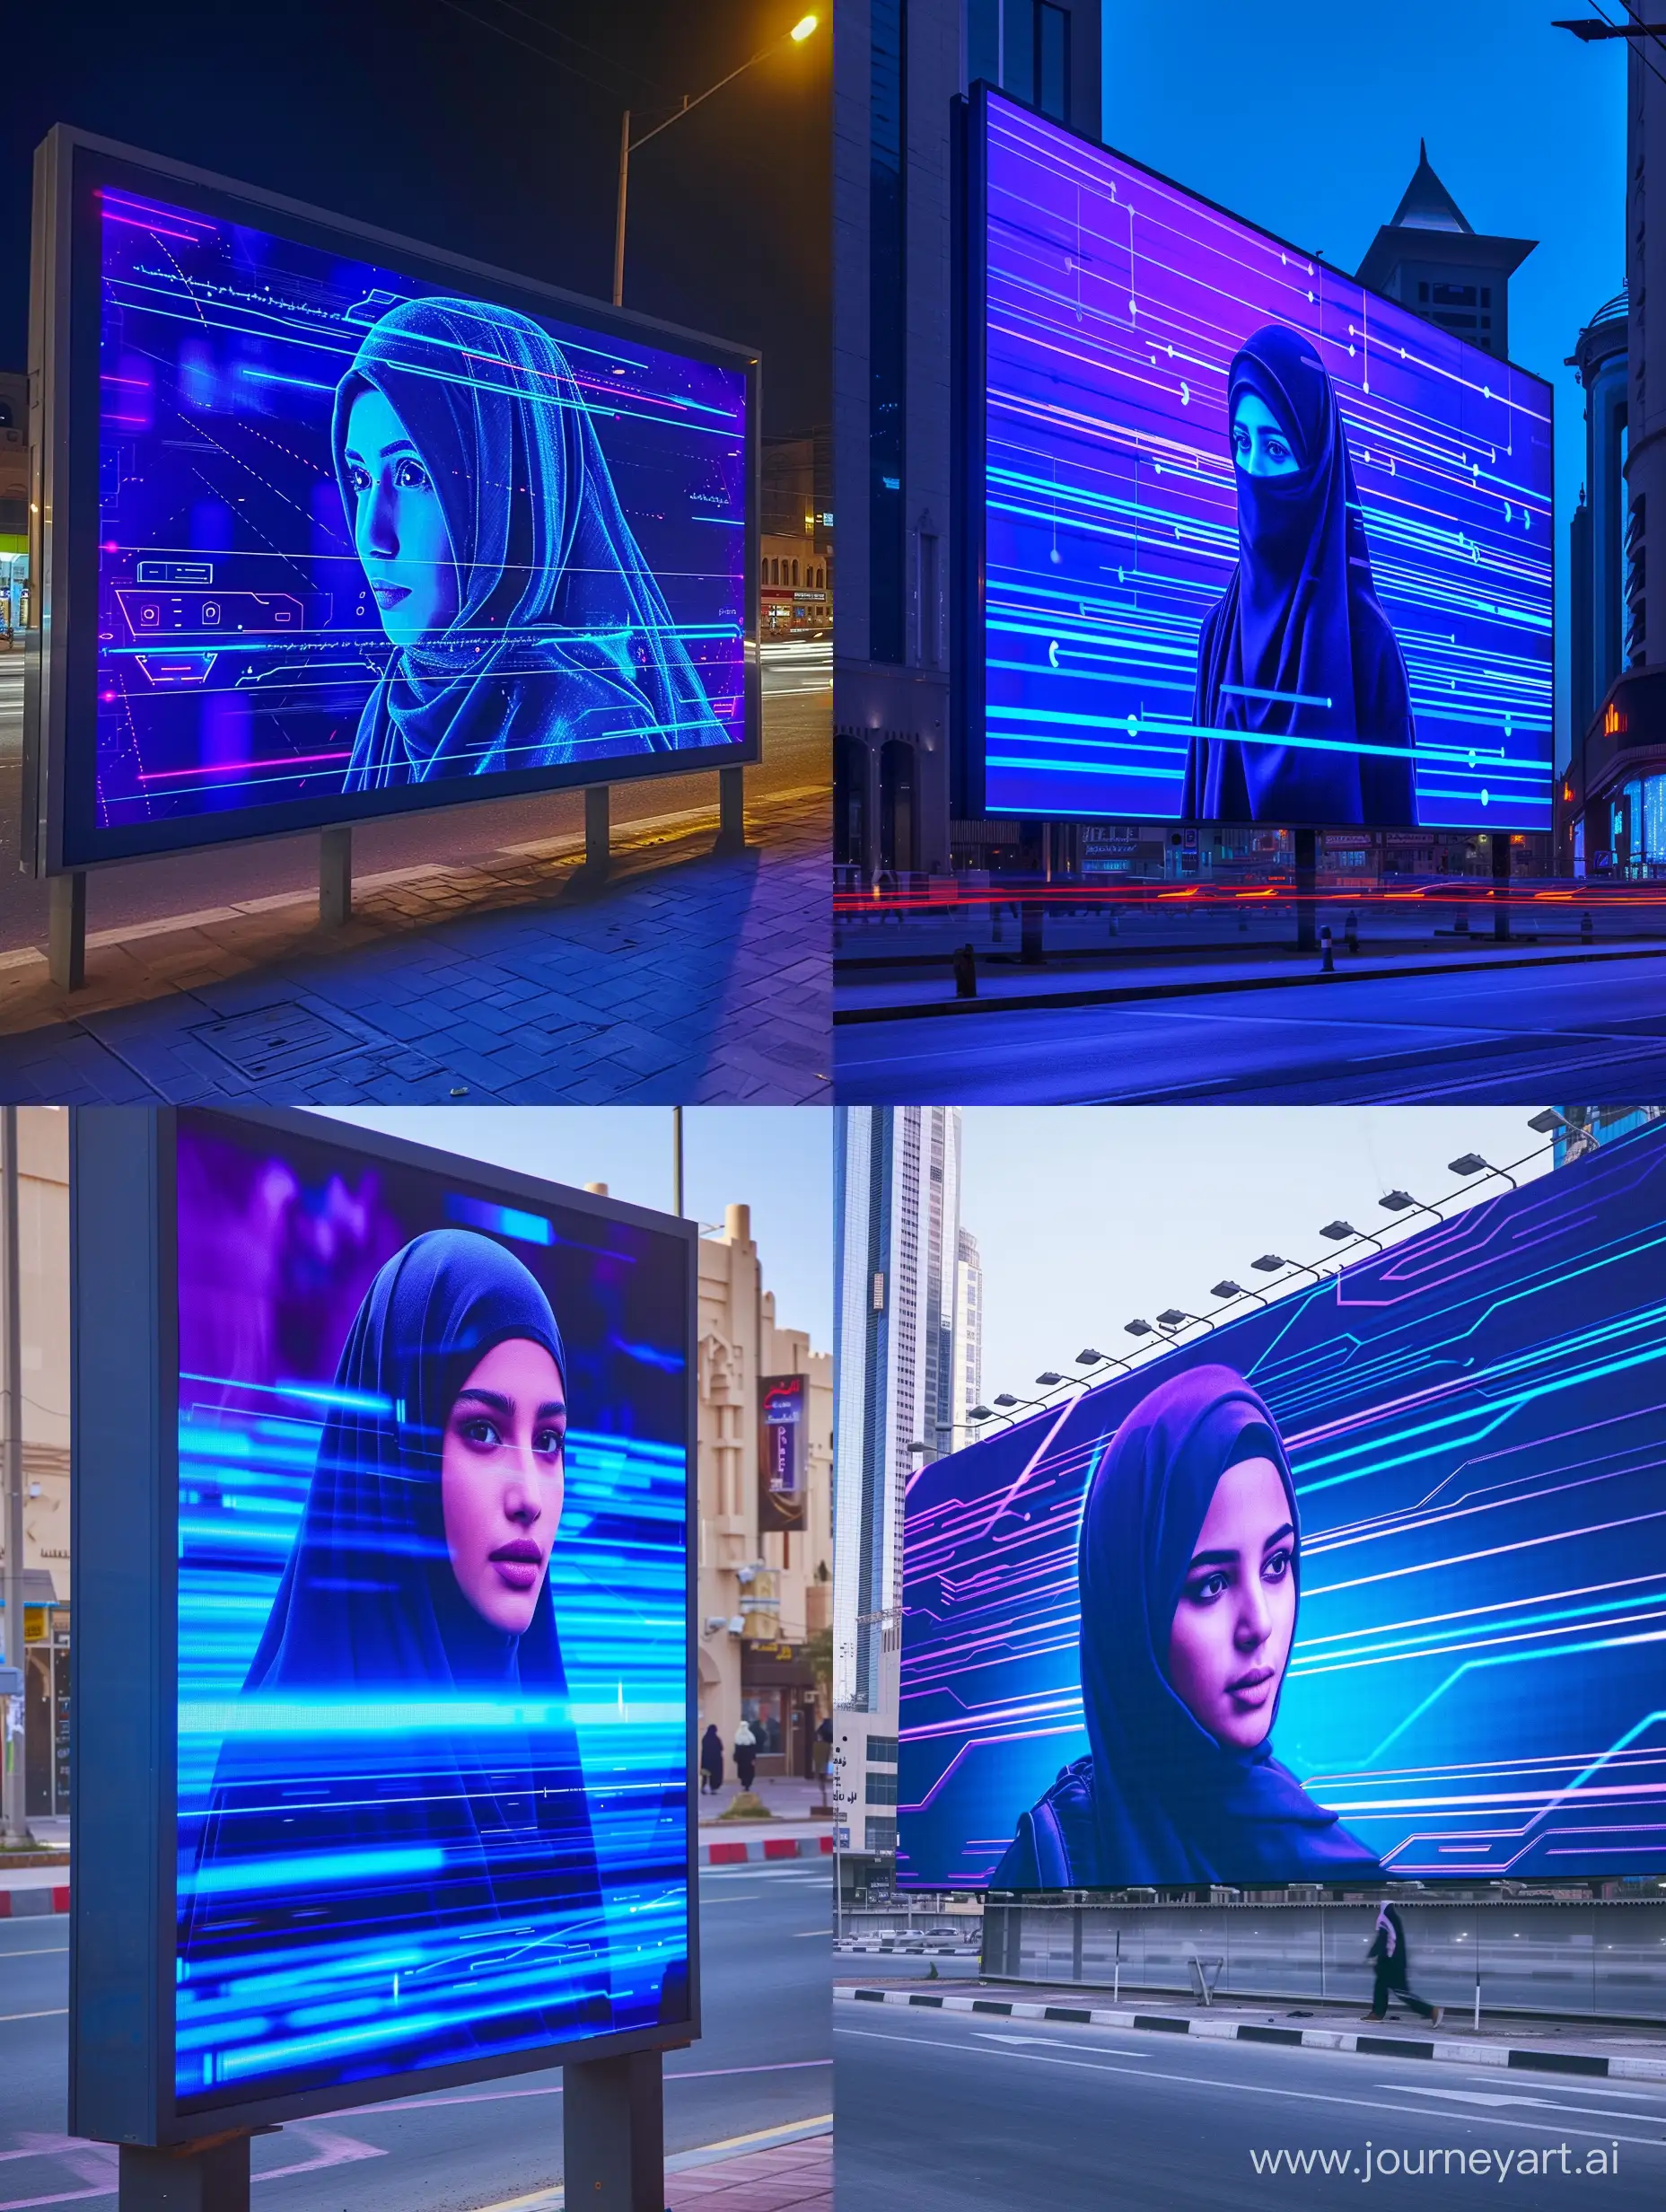 Urban-Advertising-Screen-with-Arab-Model-in-Hijab-and-Futuristic-Design